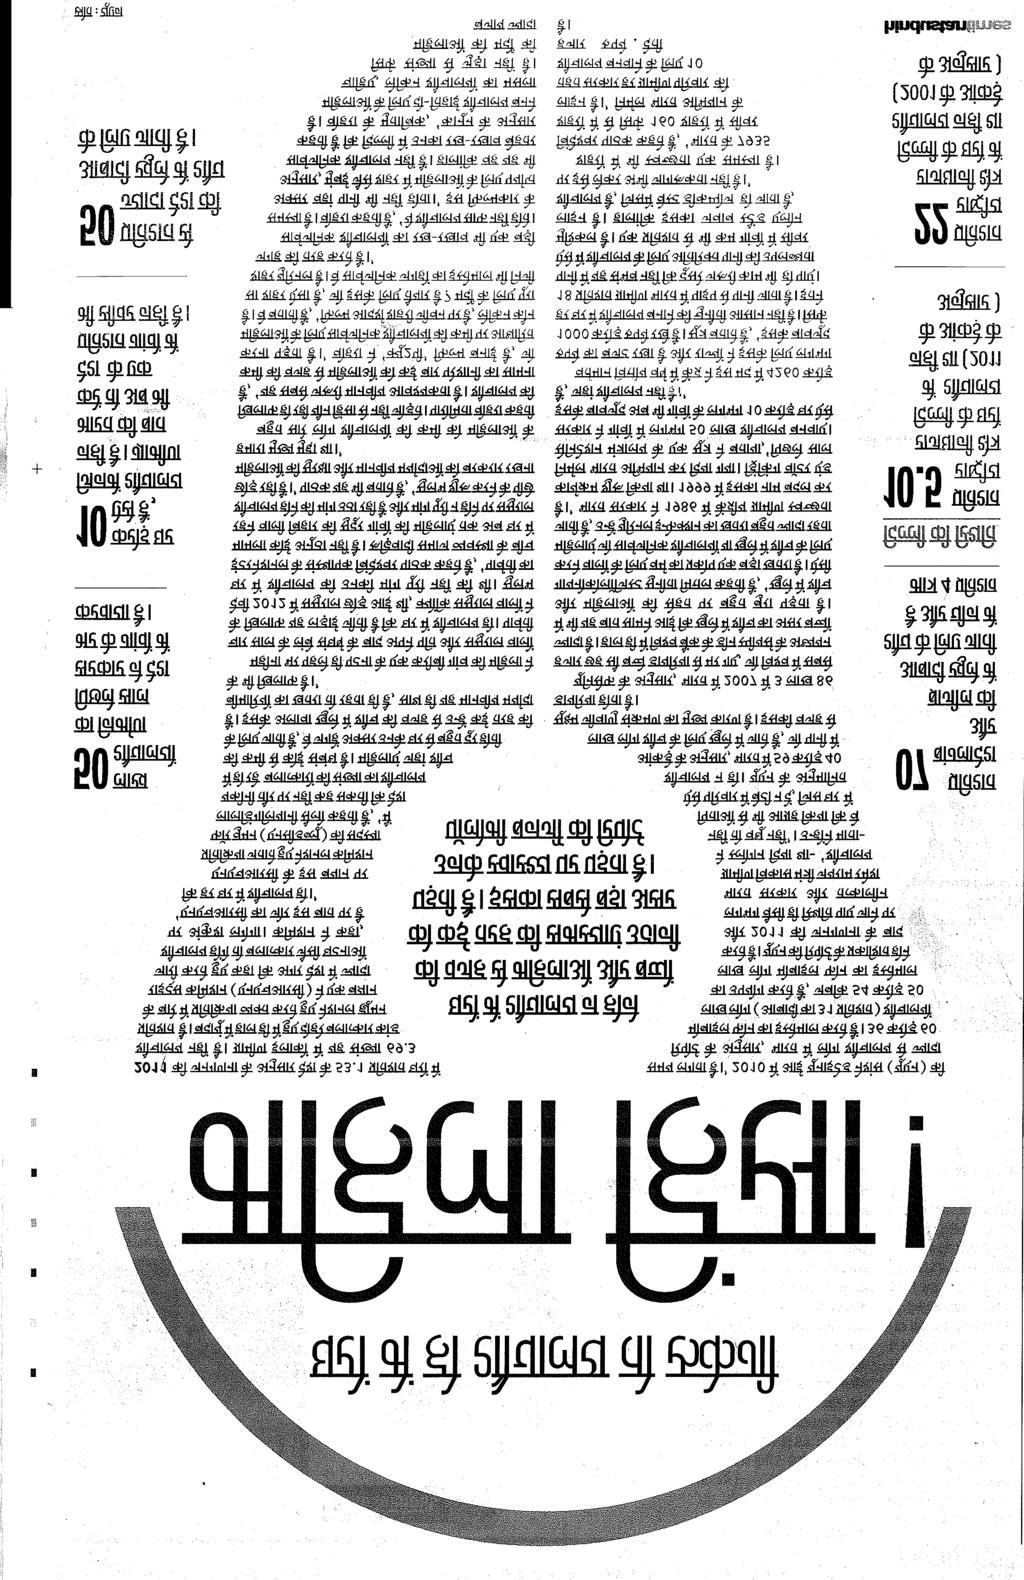 Hindustan, Delhi Thursday 19th June 2014, Page: 11 Width: